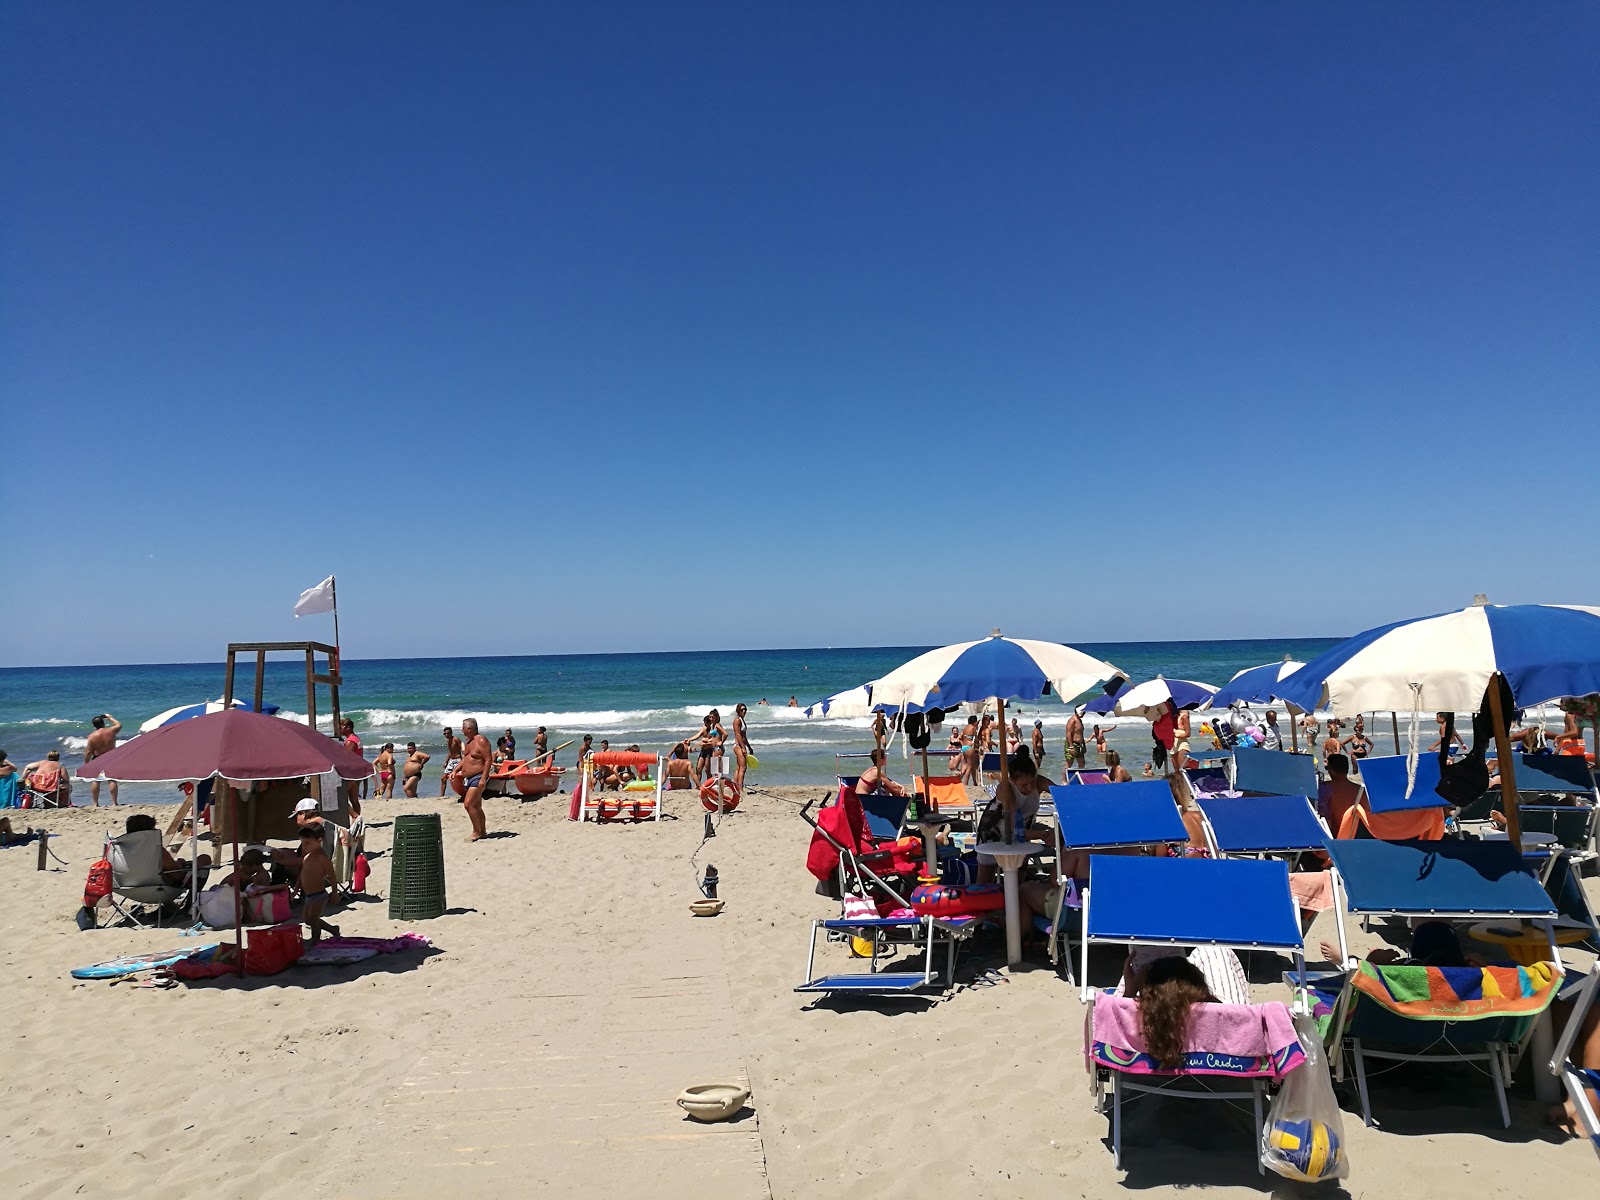 Photo of Kiwi beach II beach resort area